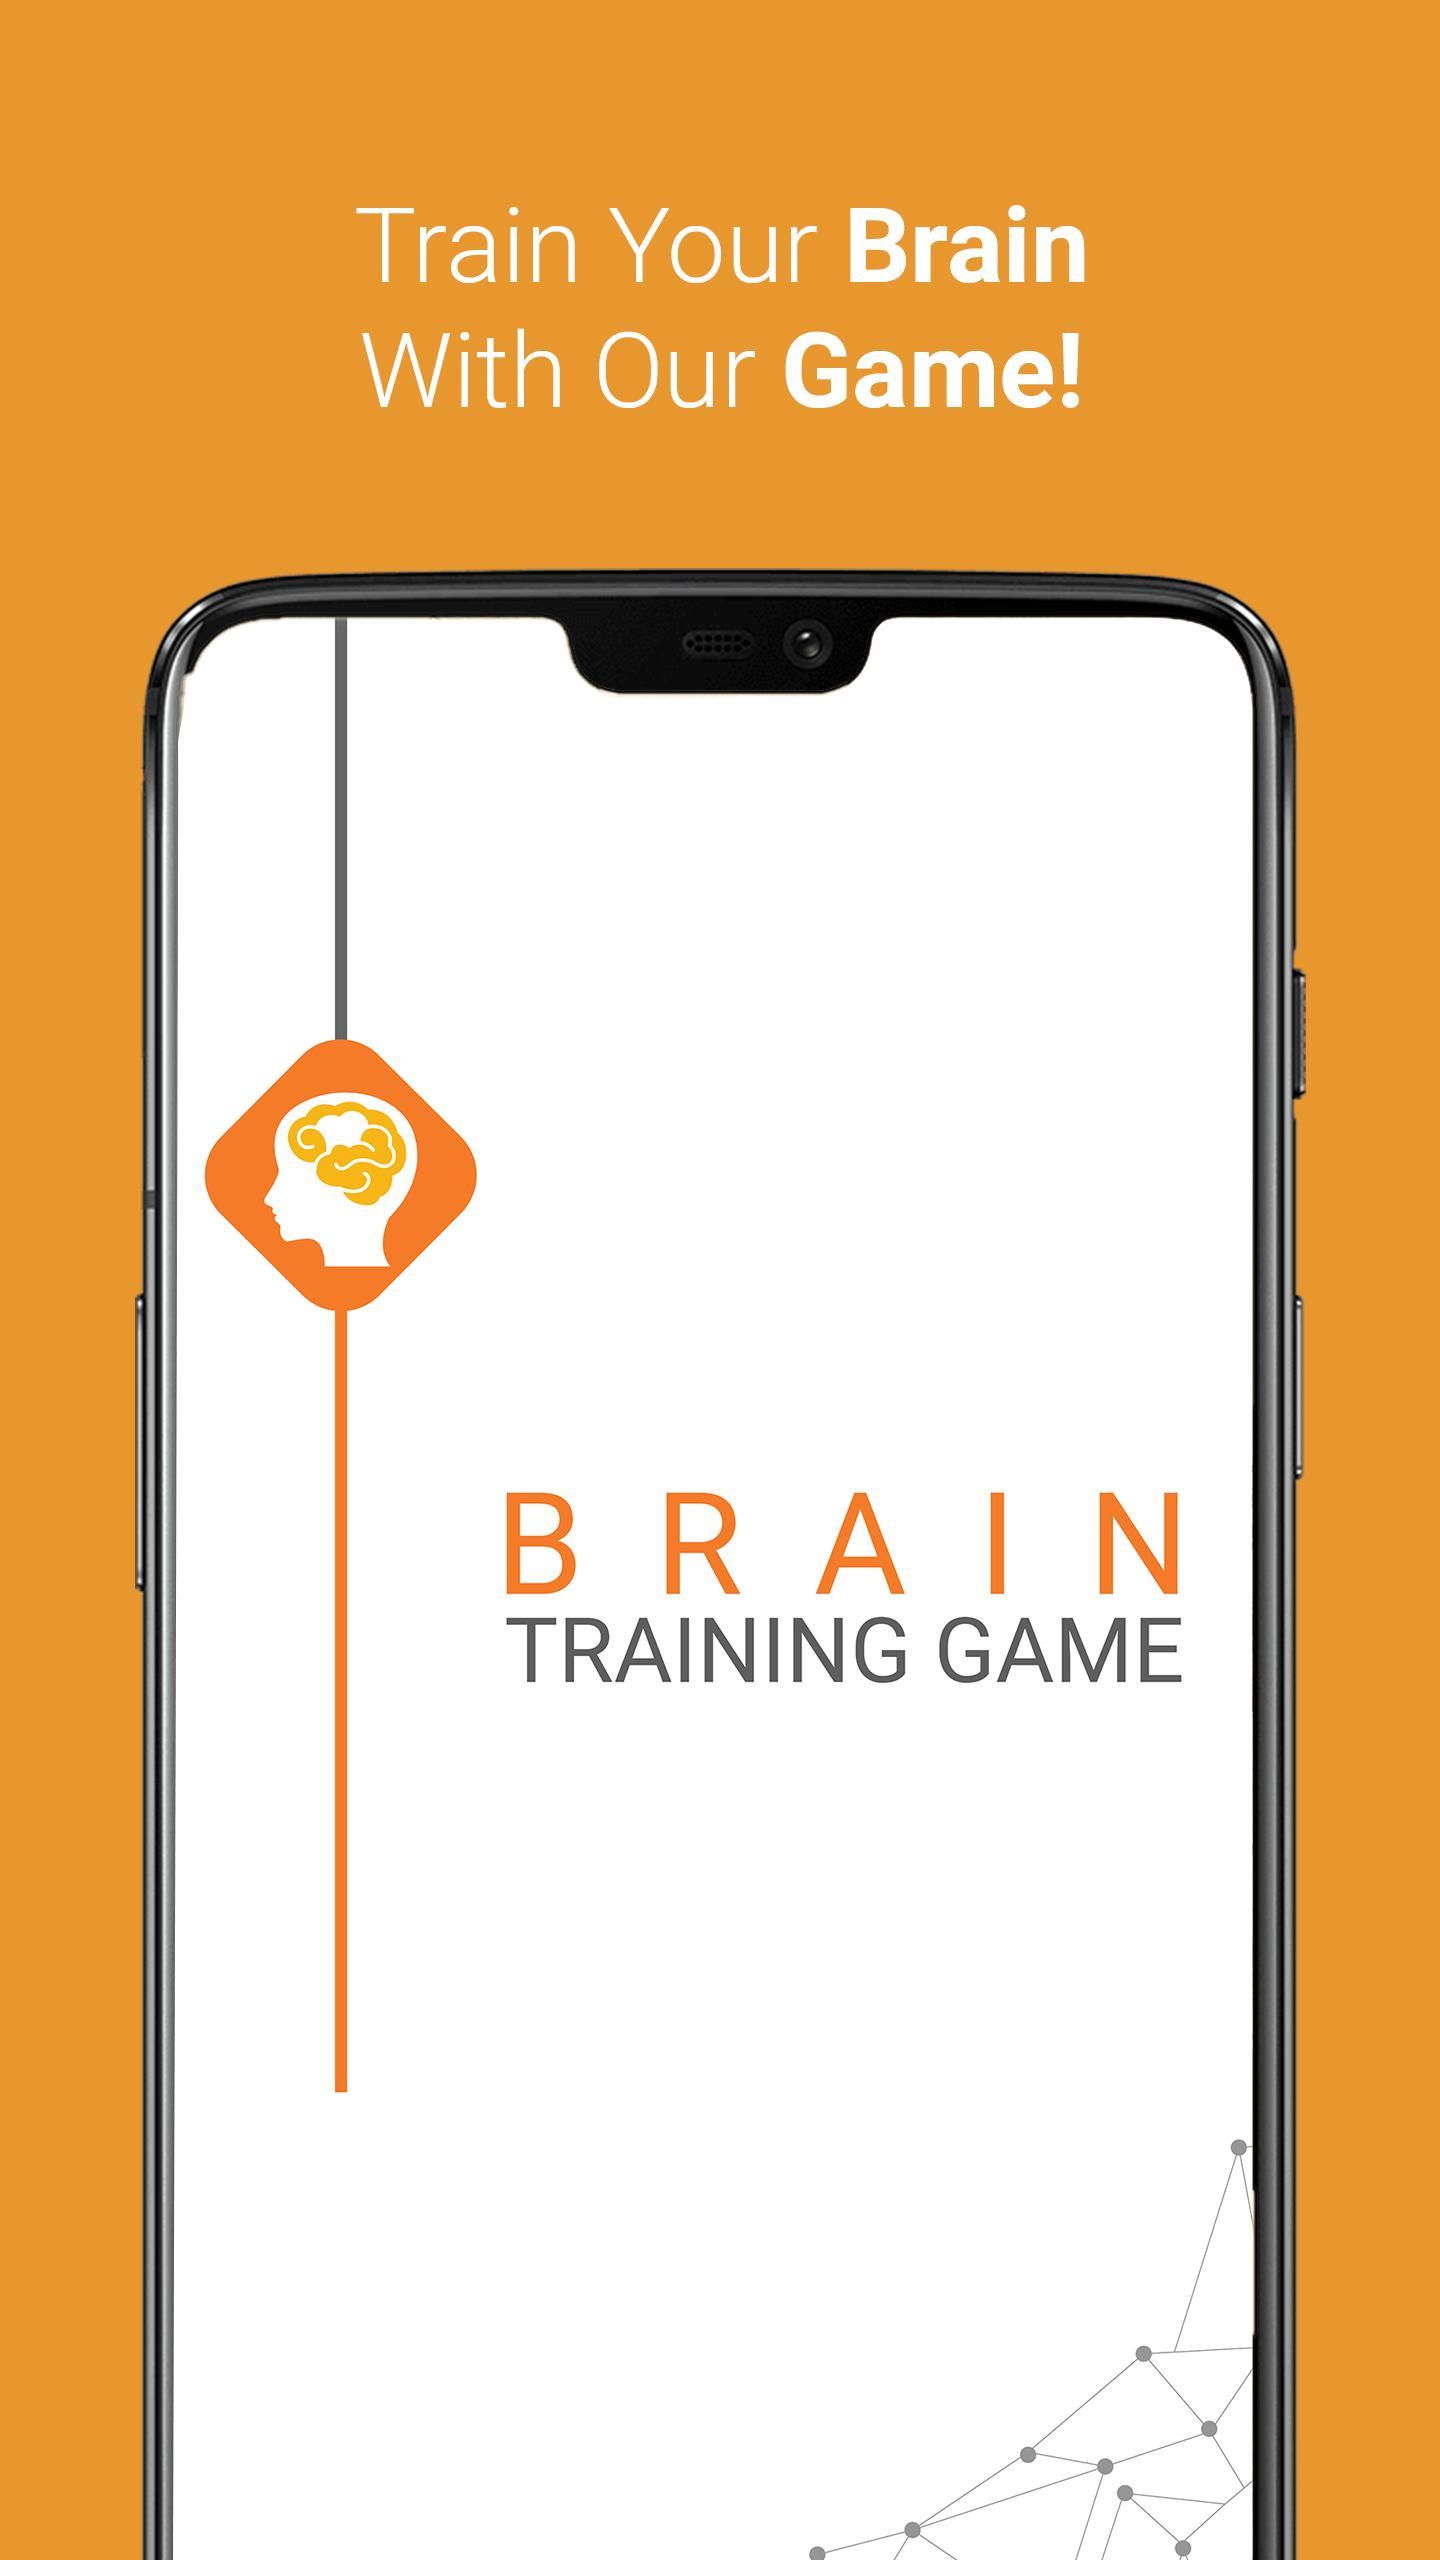 impulse-brain-training-games-on-the-app-store-problem-solving-skills